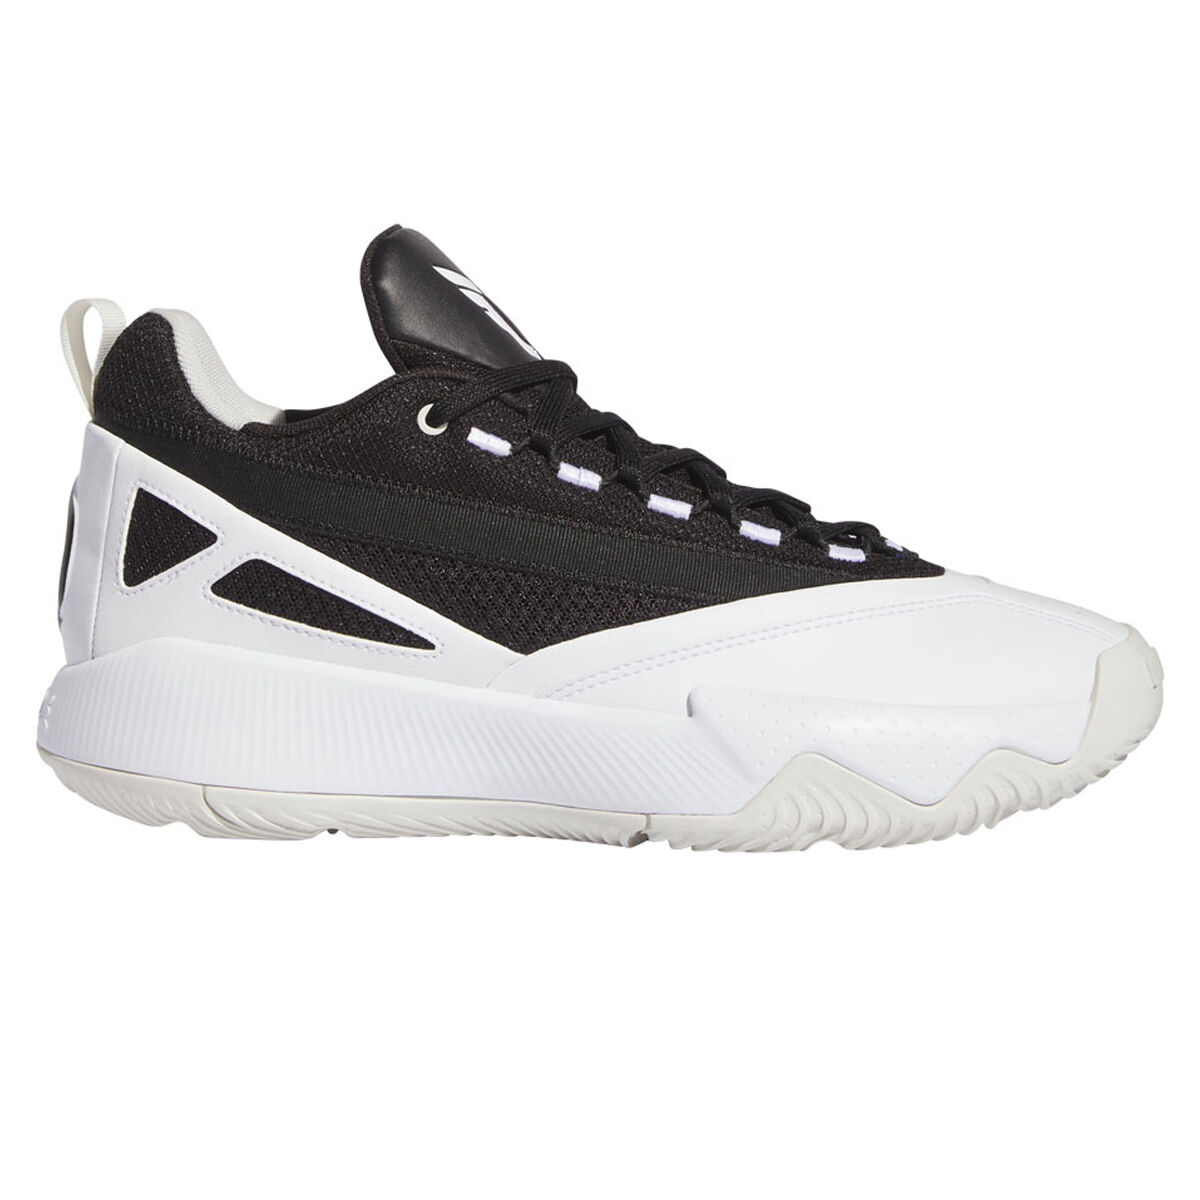 adidas Dame Certified 2 Basketball Shoes White/Black US Mens 7 / Womens 8, White/Black, rebel_hi-res